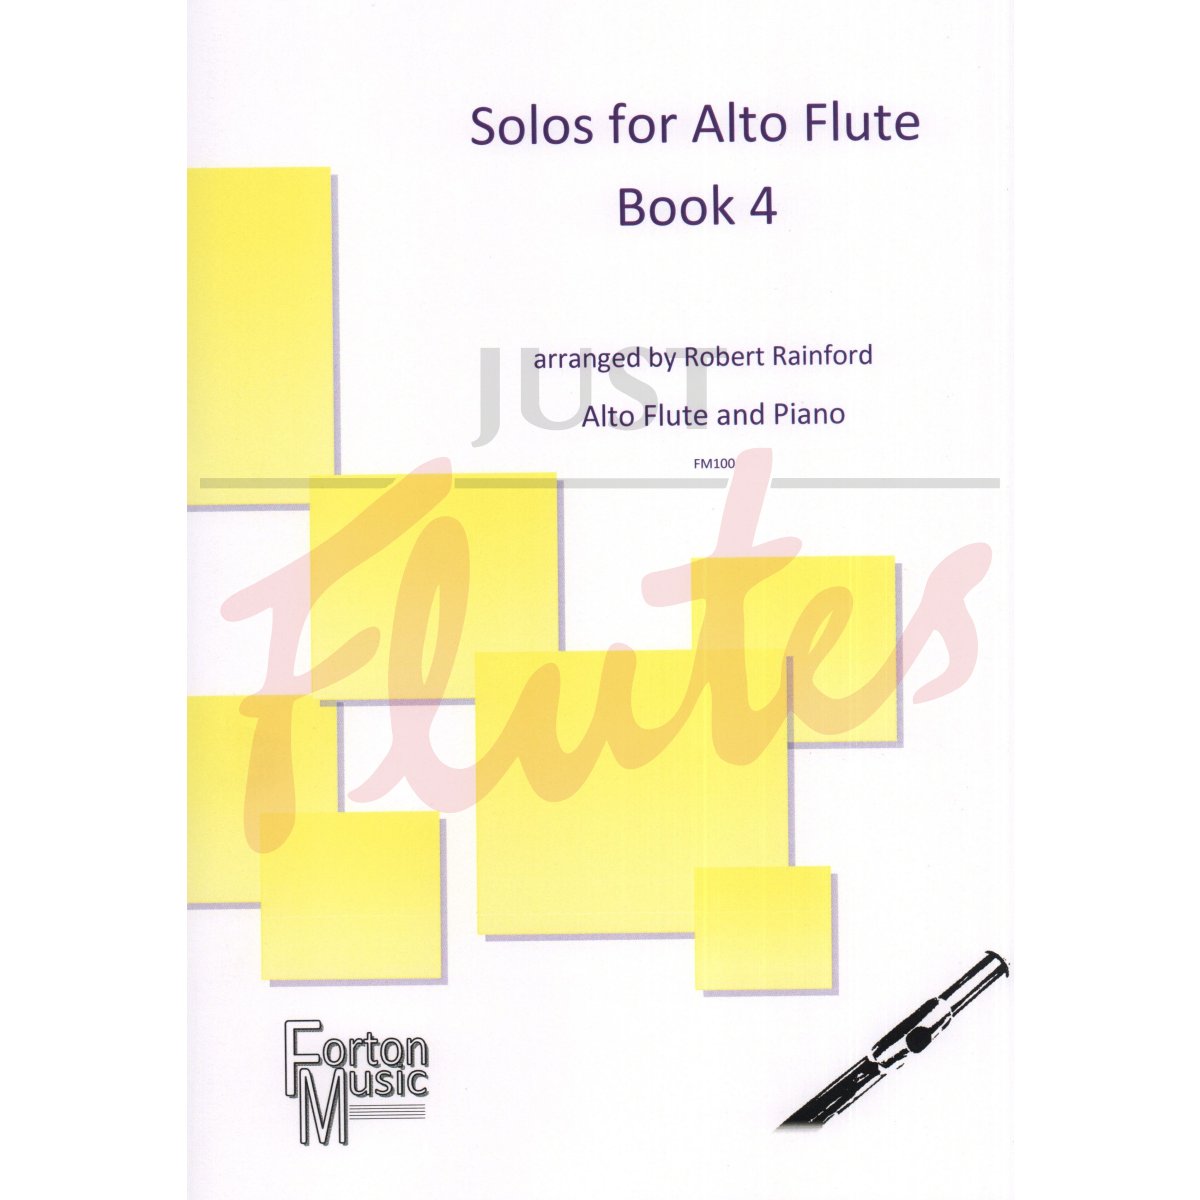 Solos for Alto Flute Book 4, with Piano Accompaniment